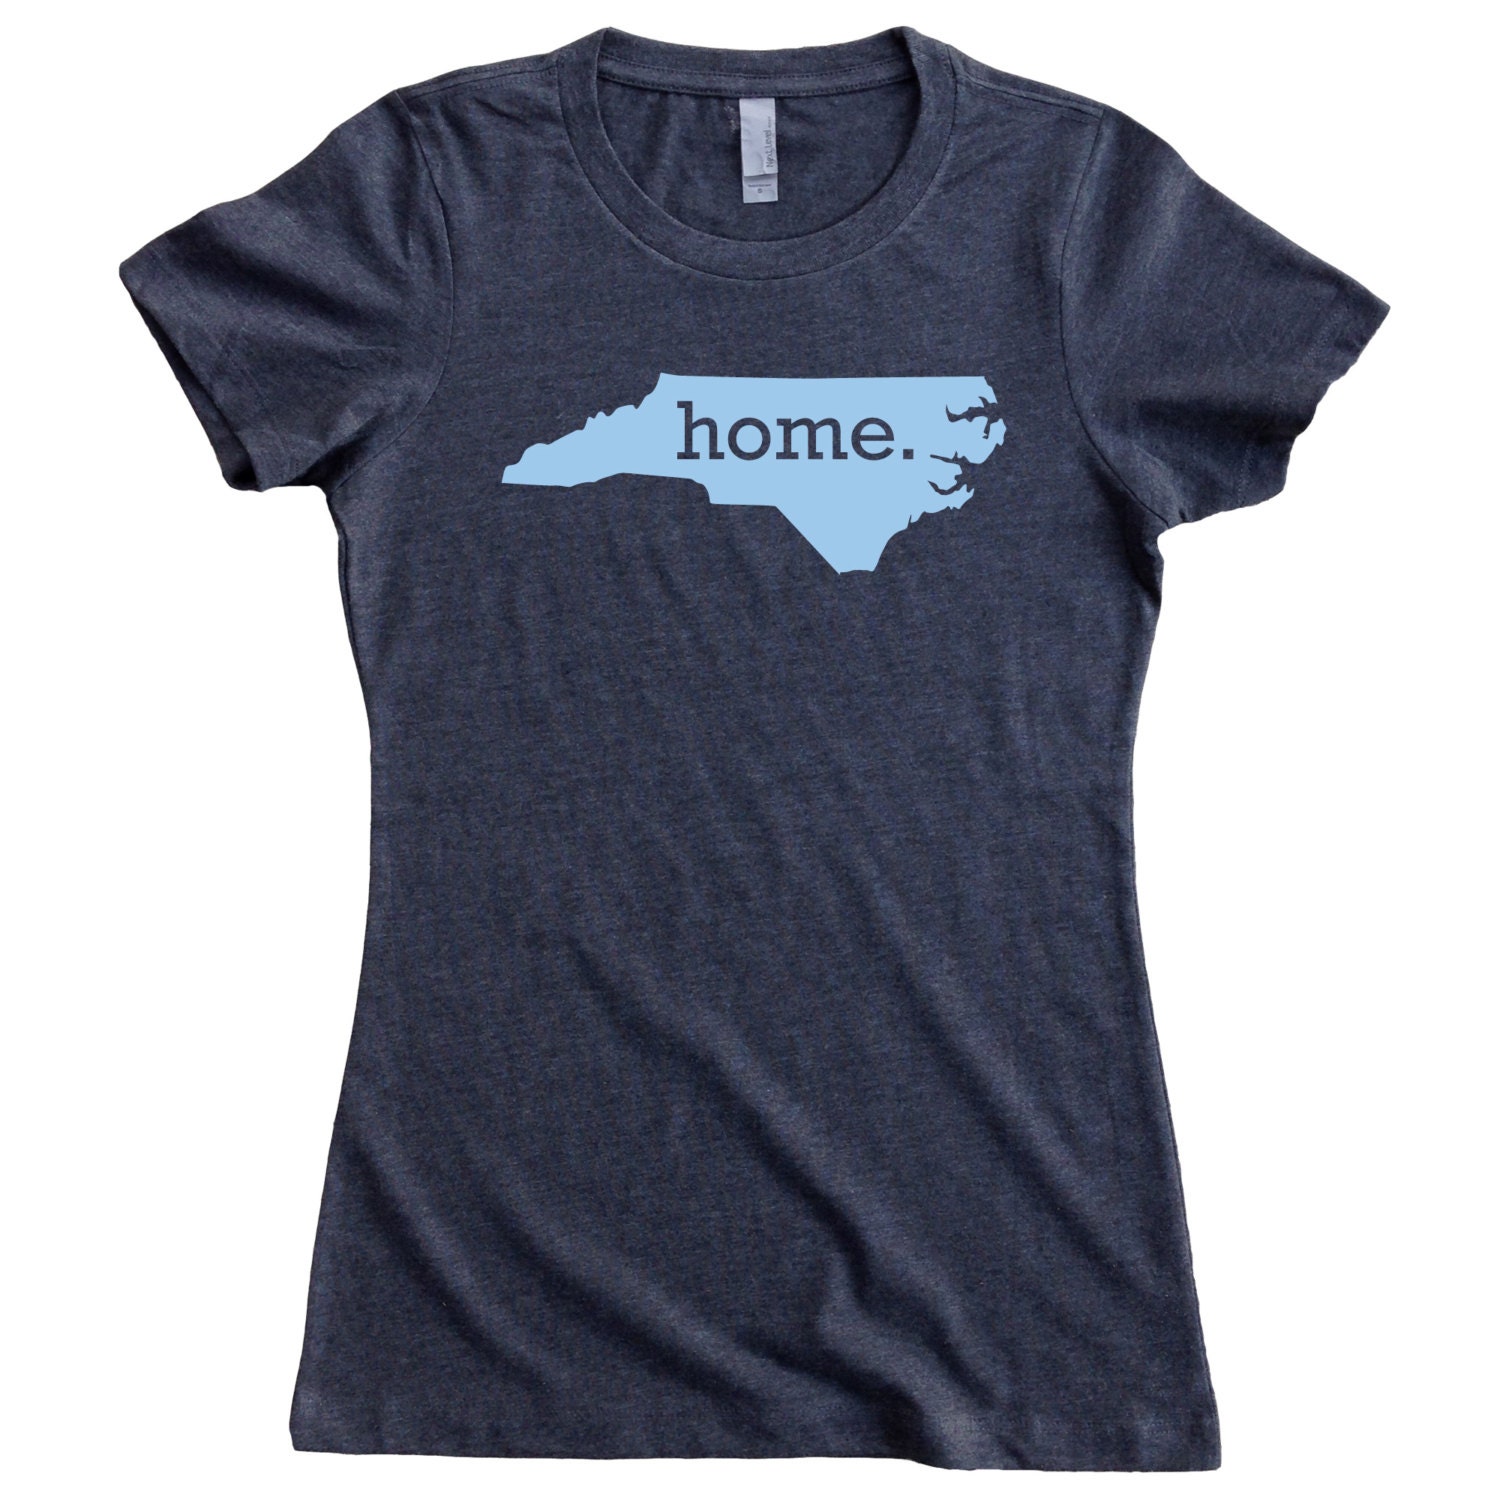 North Carolina Home State T-Shirt Women's CAROLINA BLUE